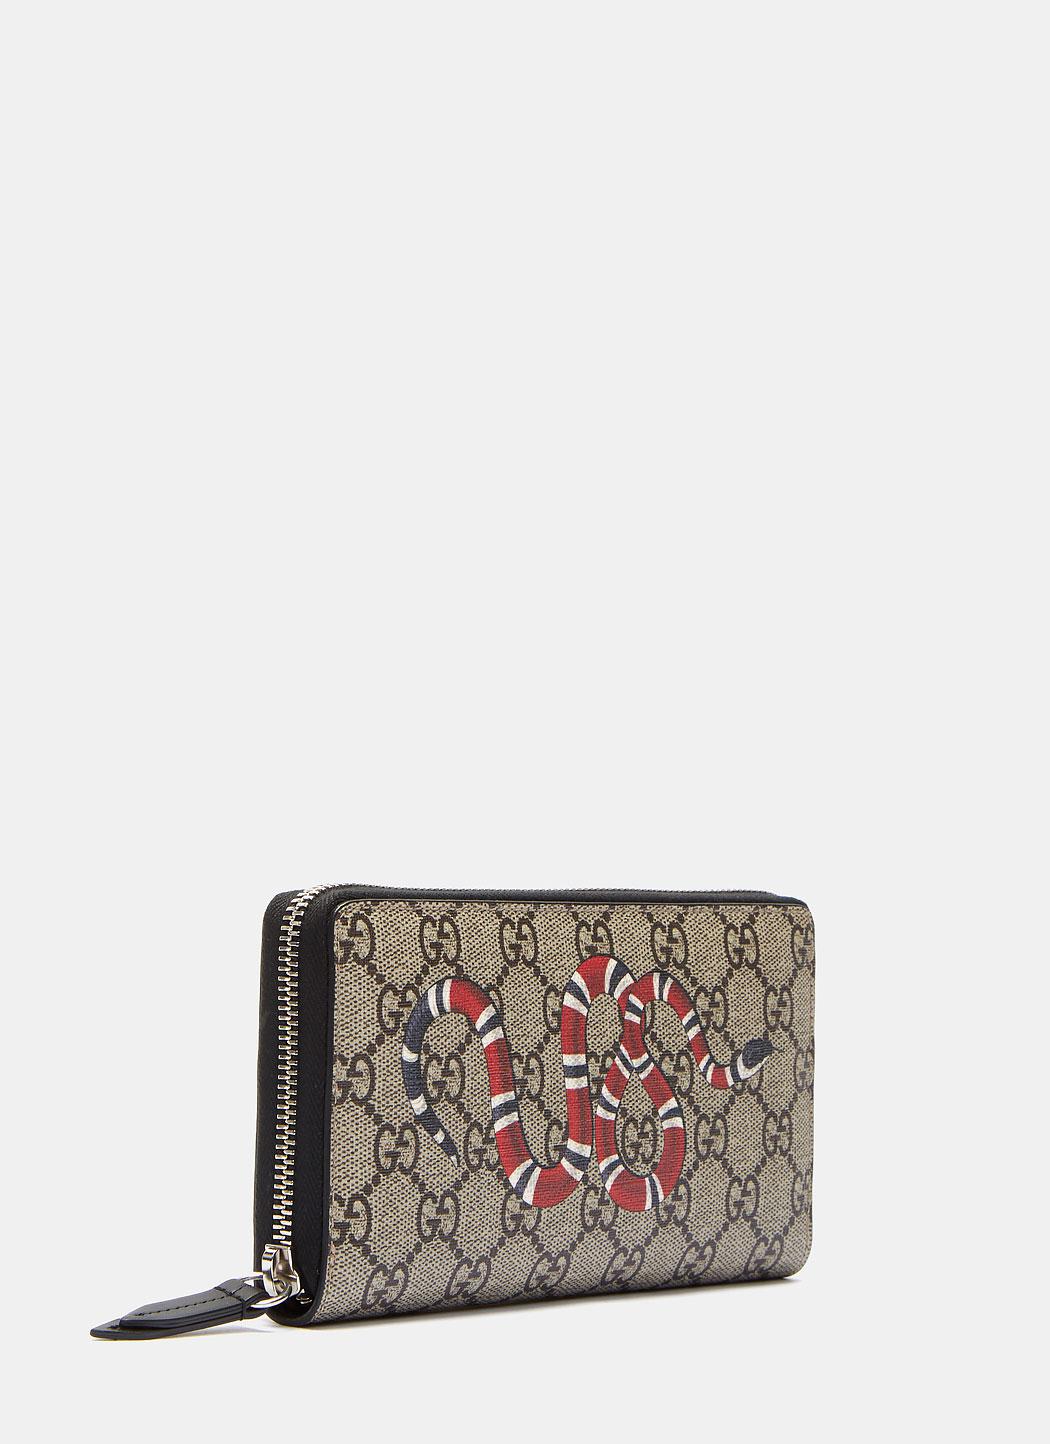 Gucci Snake Print GG Supreme Zip Around Wallet for Men | Lyst